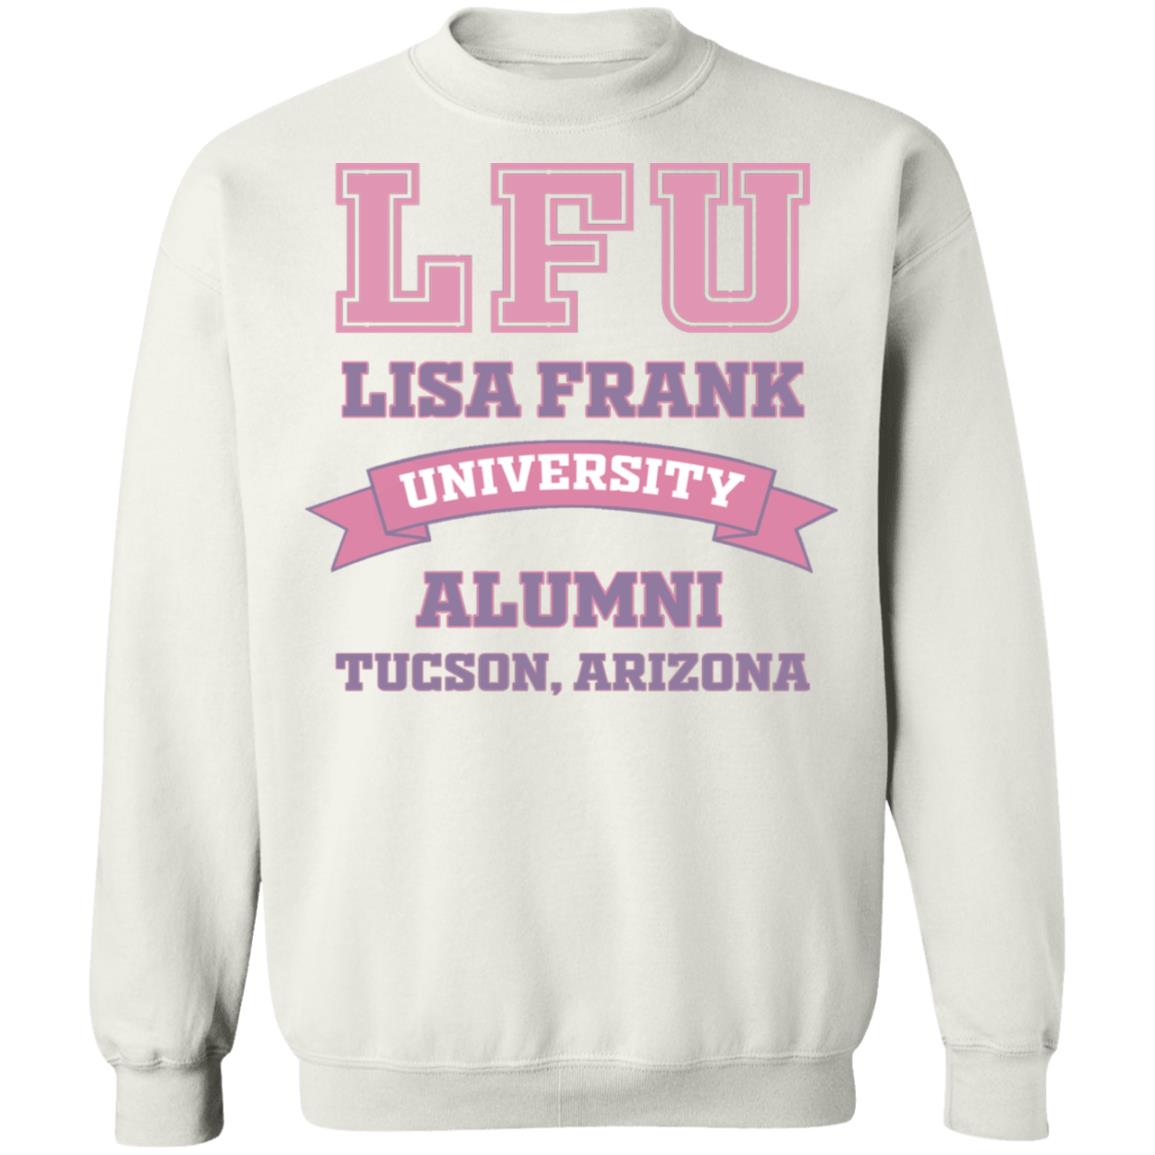 lisa frank university sweatshirt